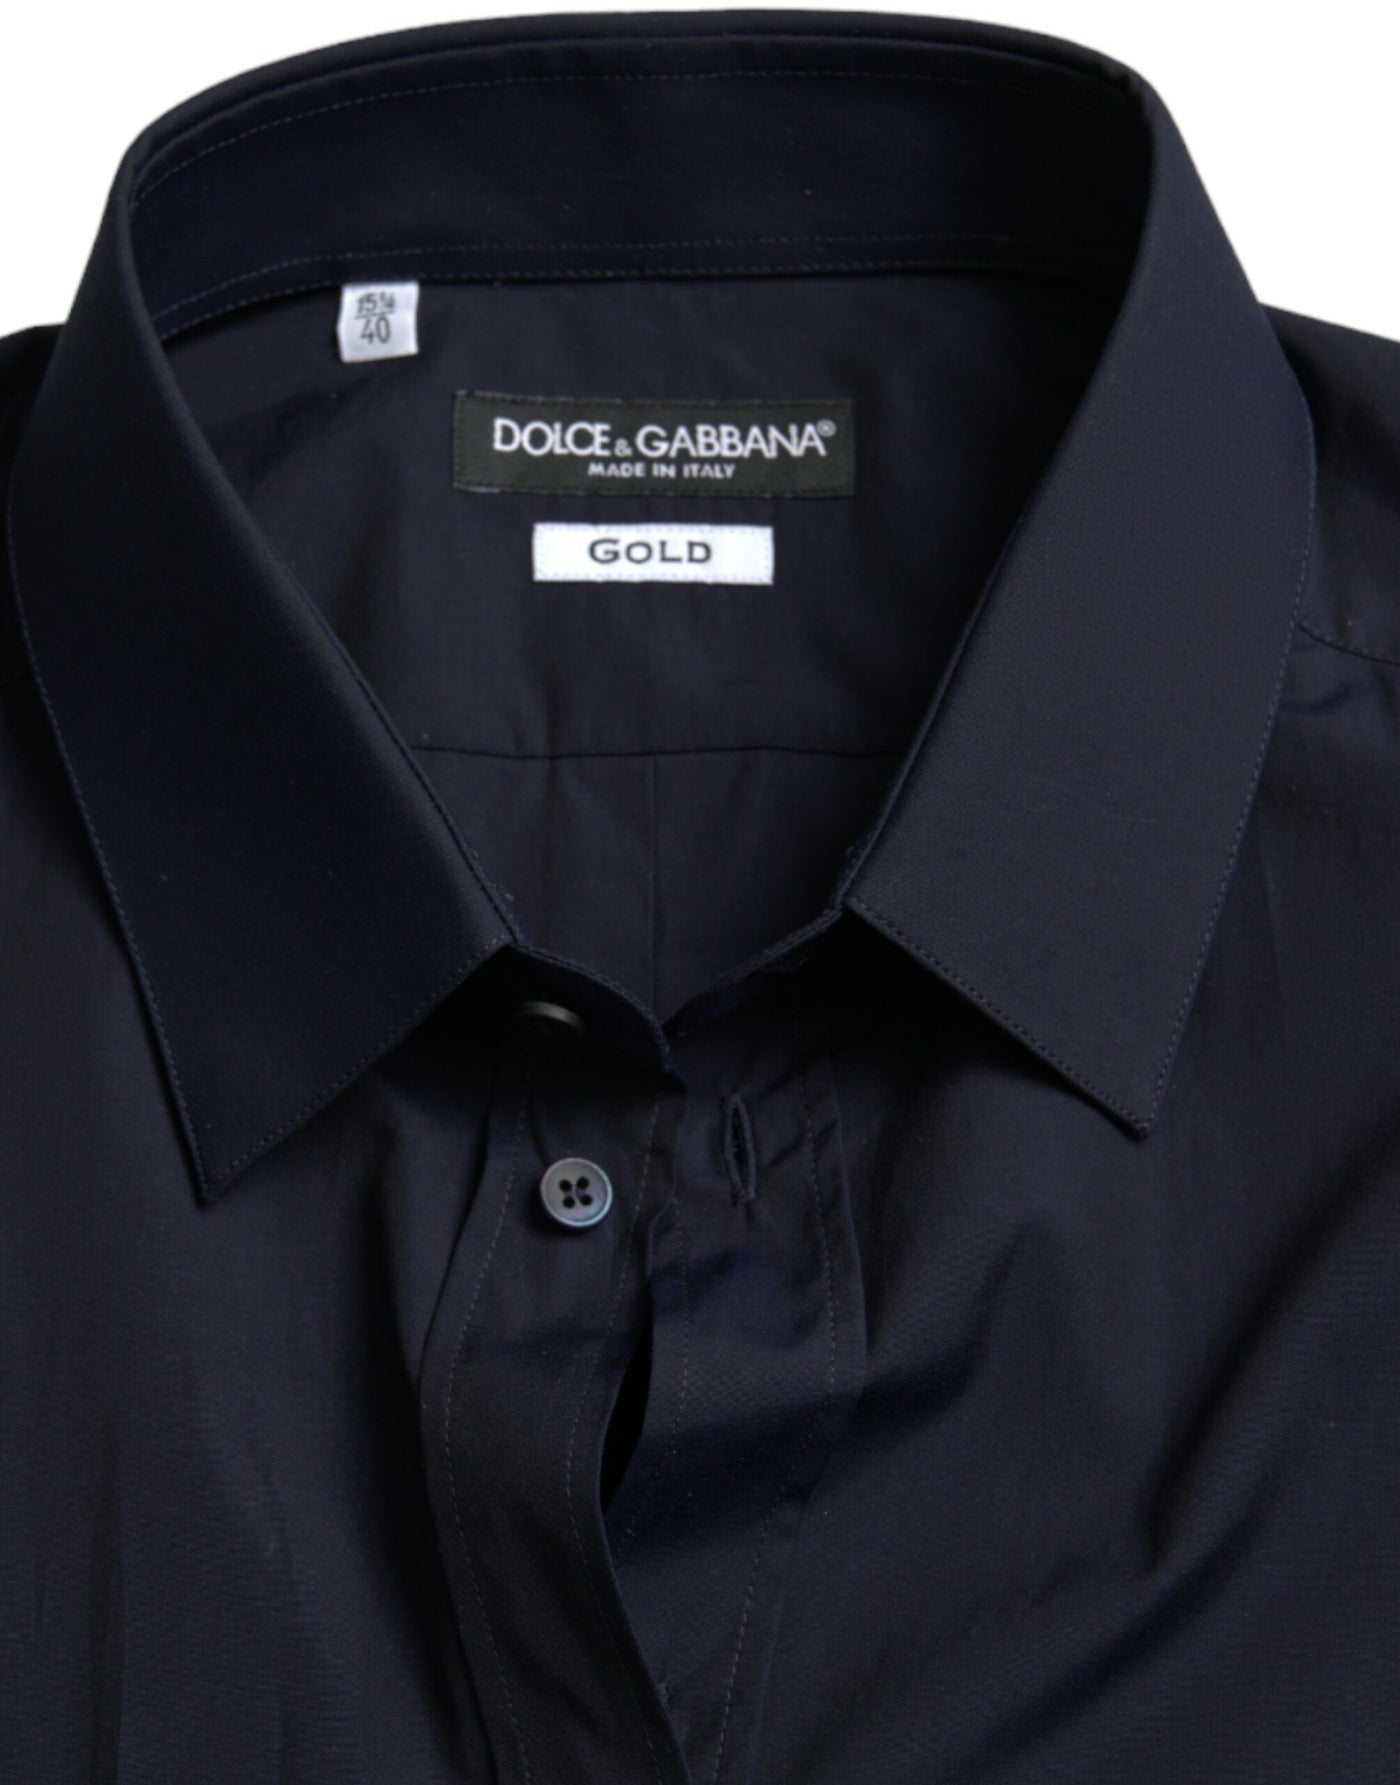 Dolce & Gabbana  Navy Blue Slim Fit Formal GOLD Dress Shirt